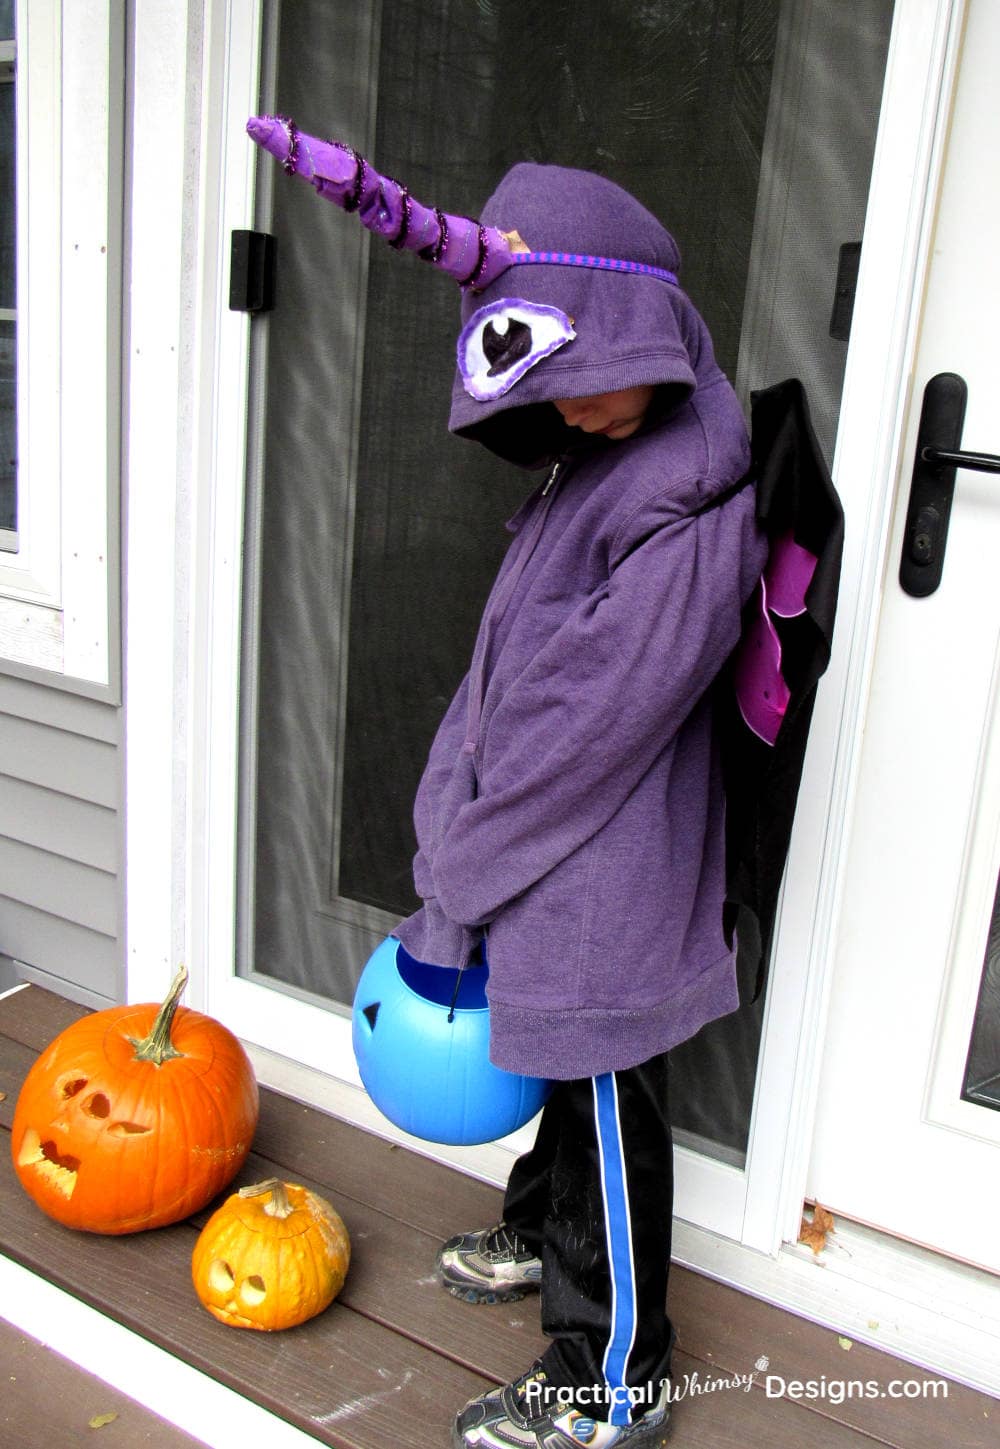 Flying purple people eater costume